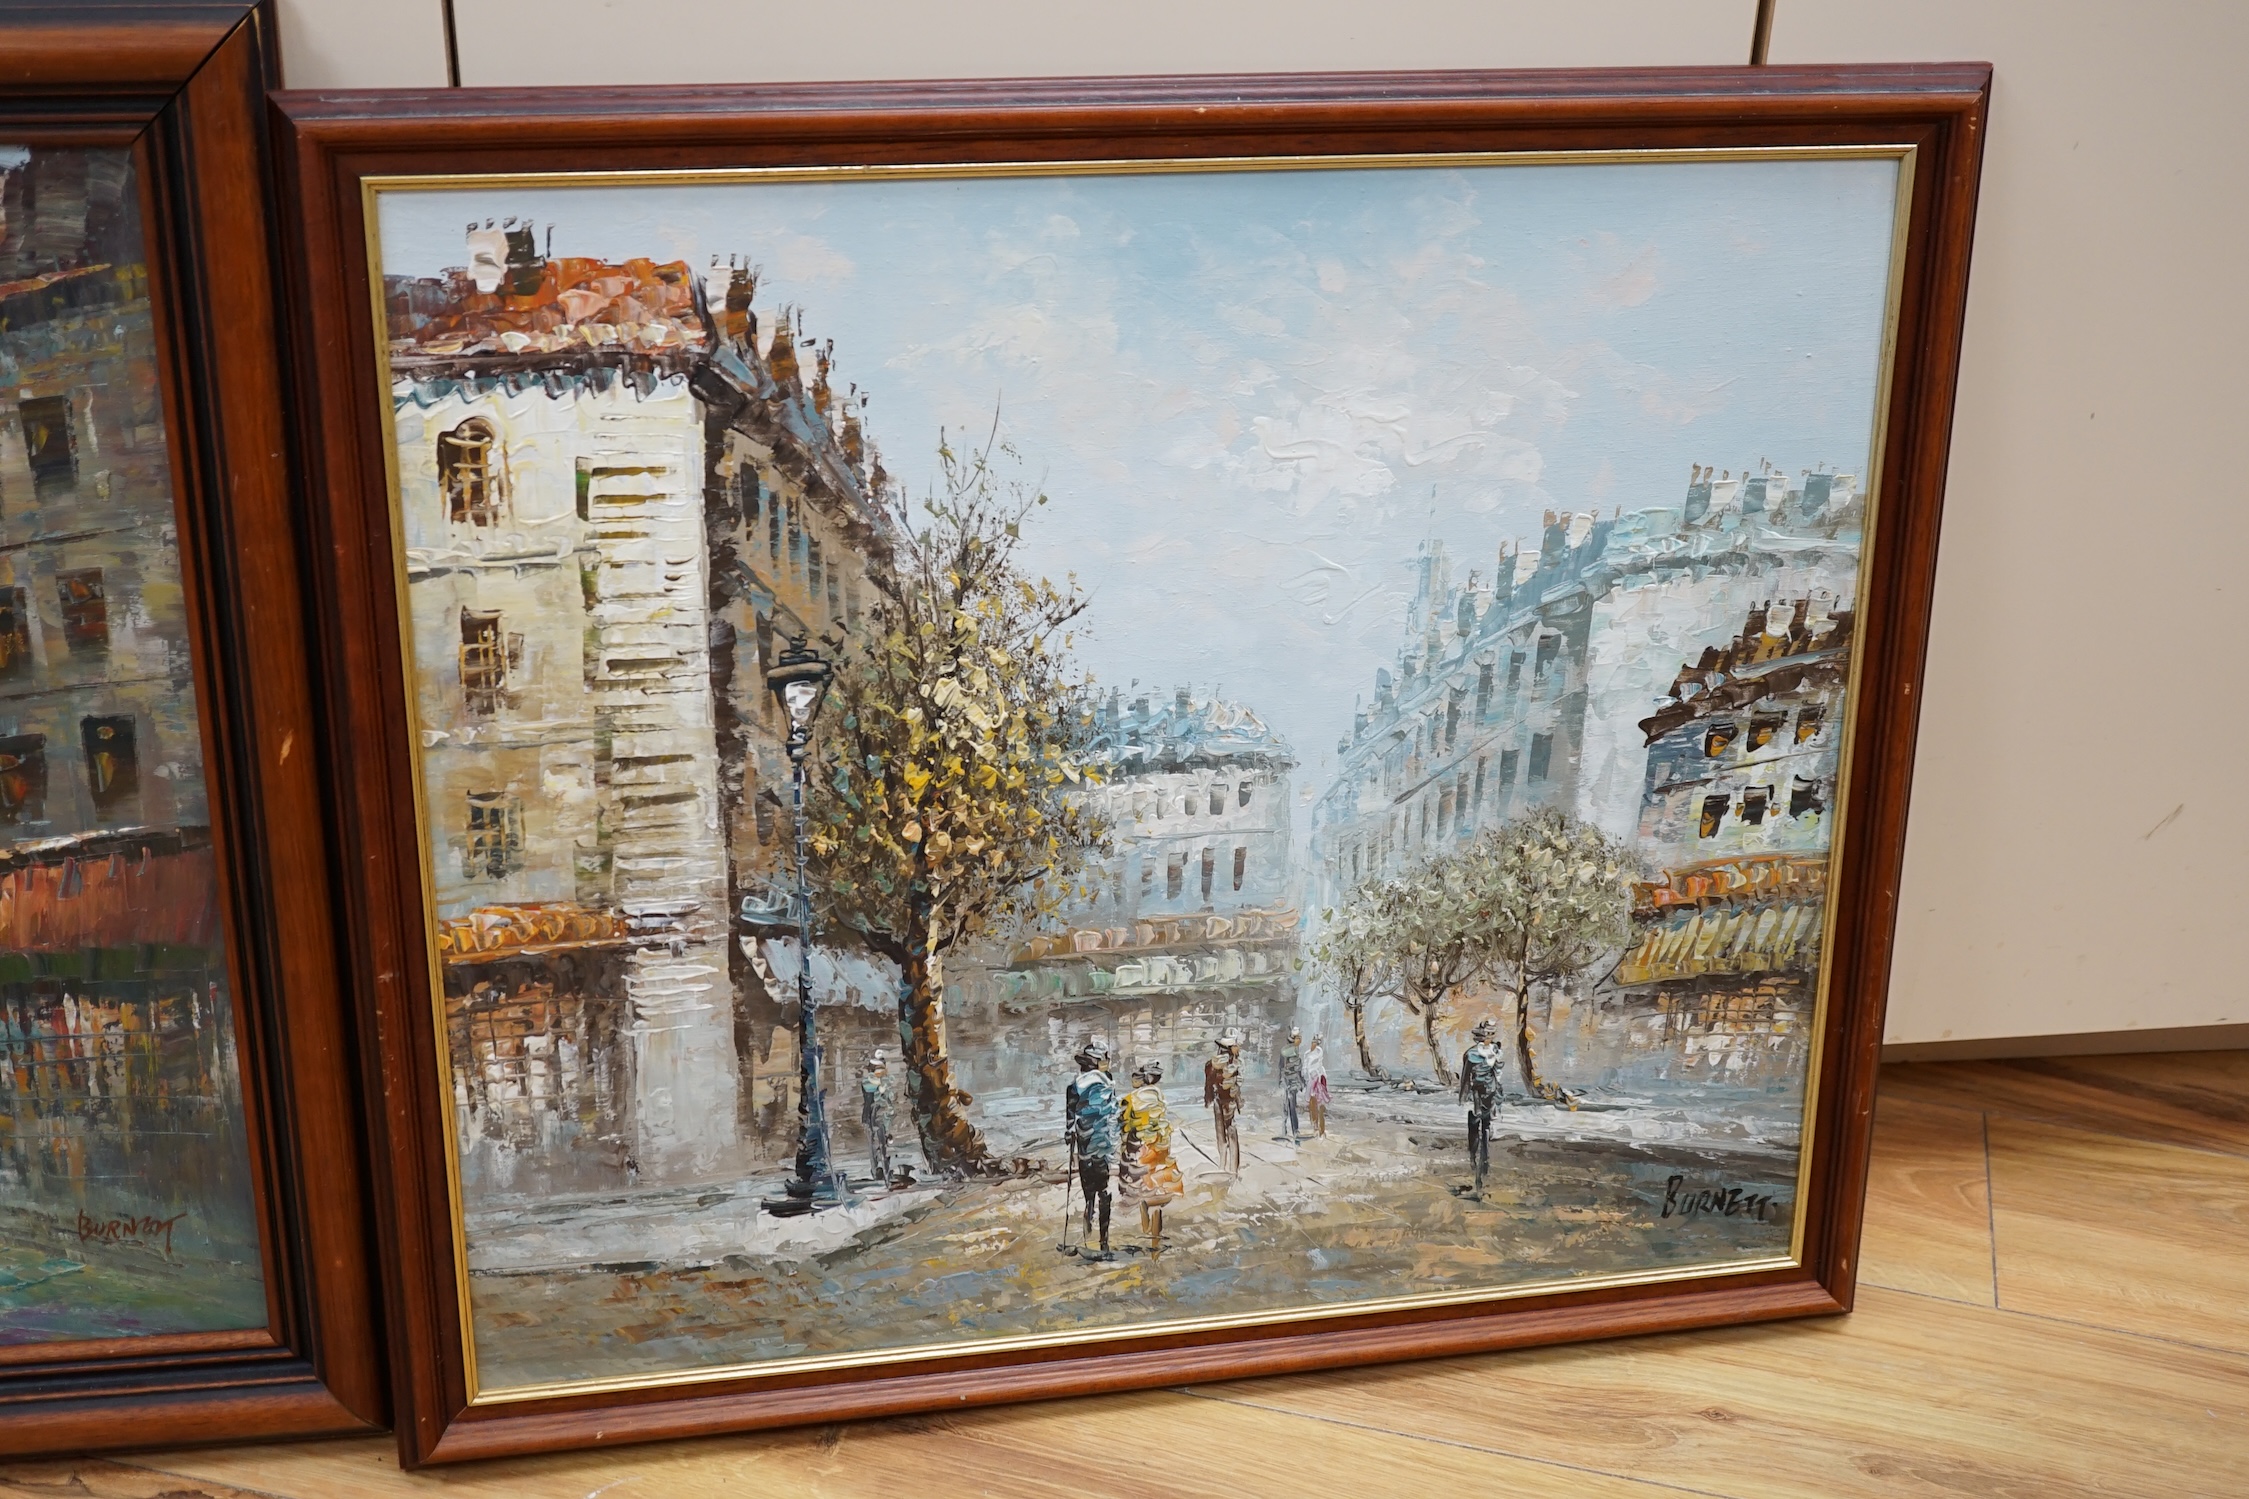 Caroline Burnett (1877-1950), two Impressionist oils, one on canvas, Parisian street scenes, largest 49 x 59cm. Condition - good, some surface dirt